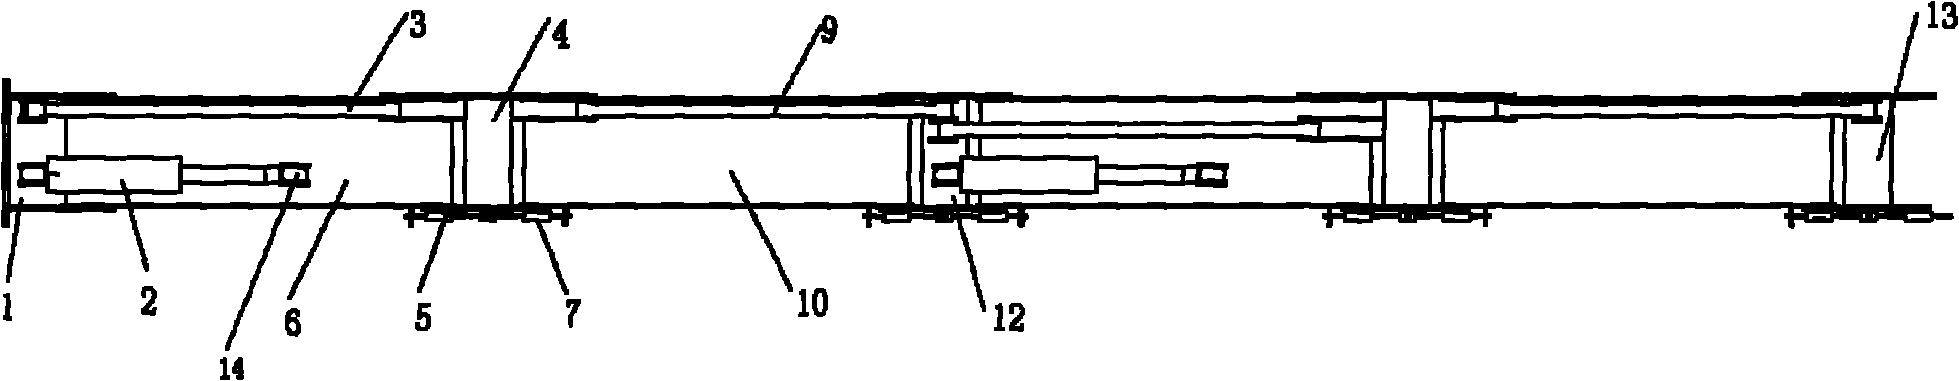 Multi-joint mechanical arm mechanism